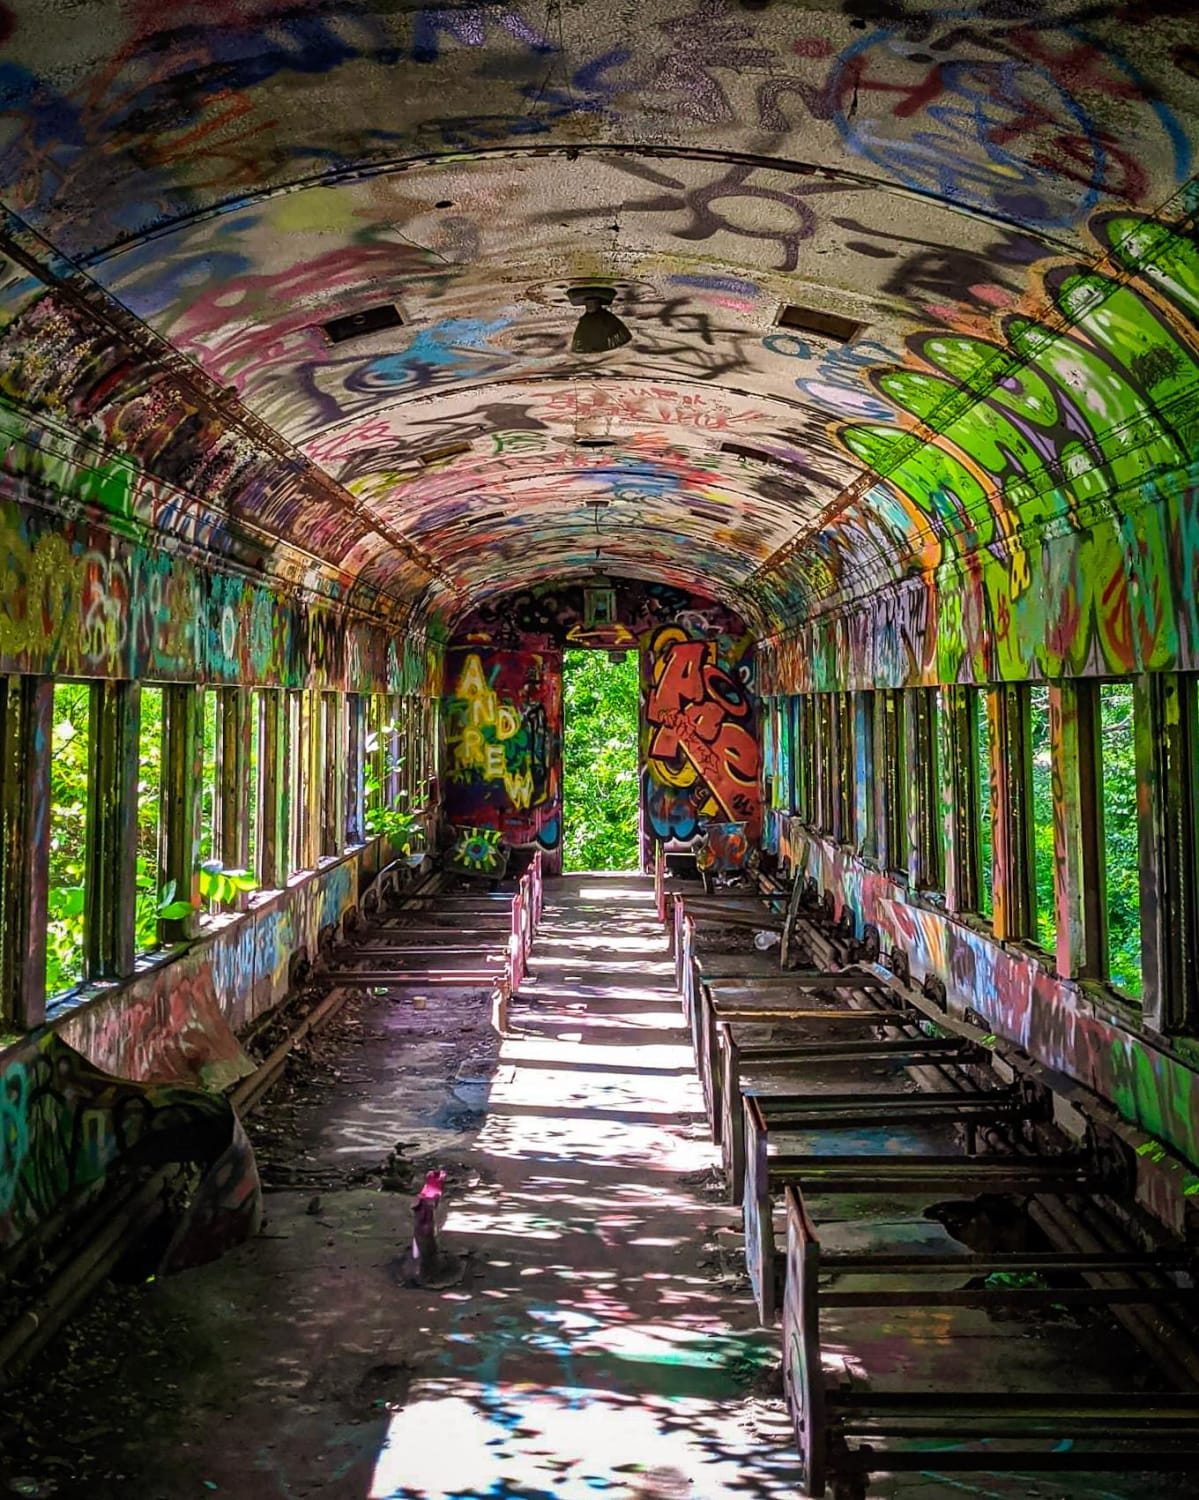 ITAP inside an abandoned train car